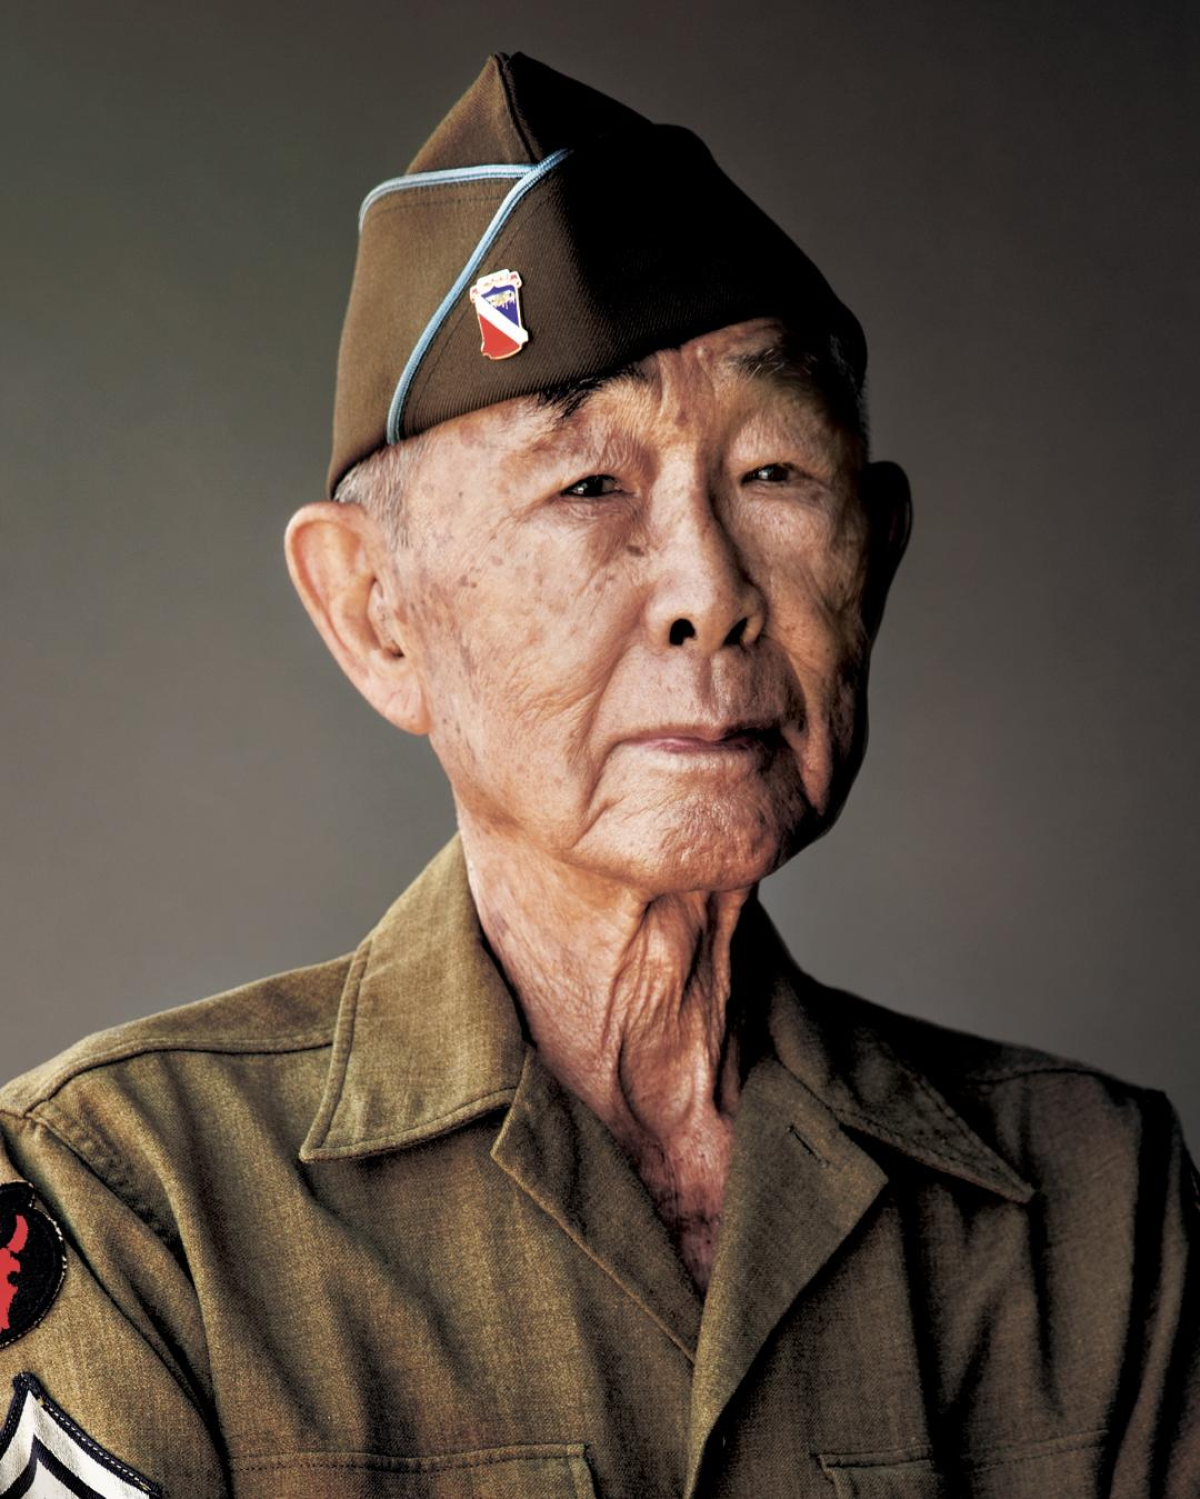 Frank Wada Sr. in his World War II uniform.